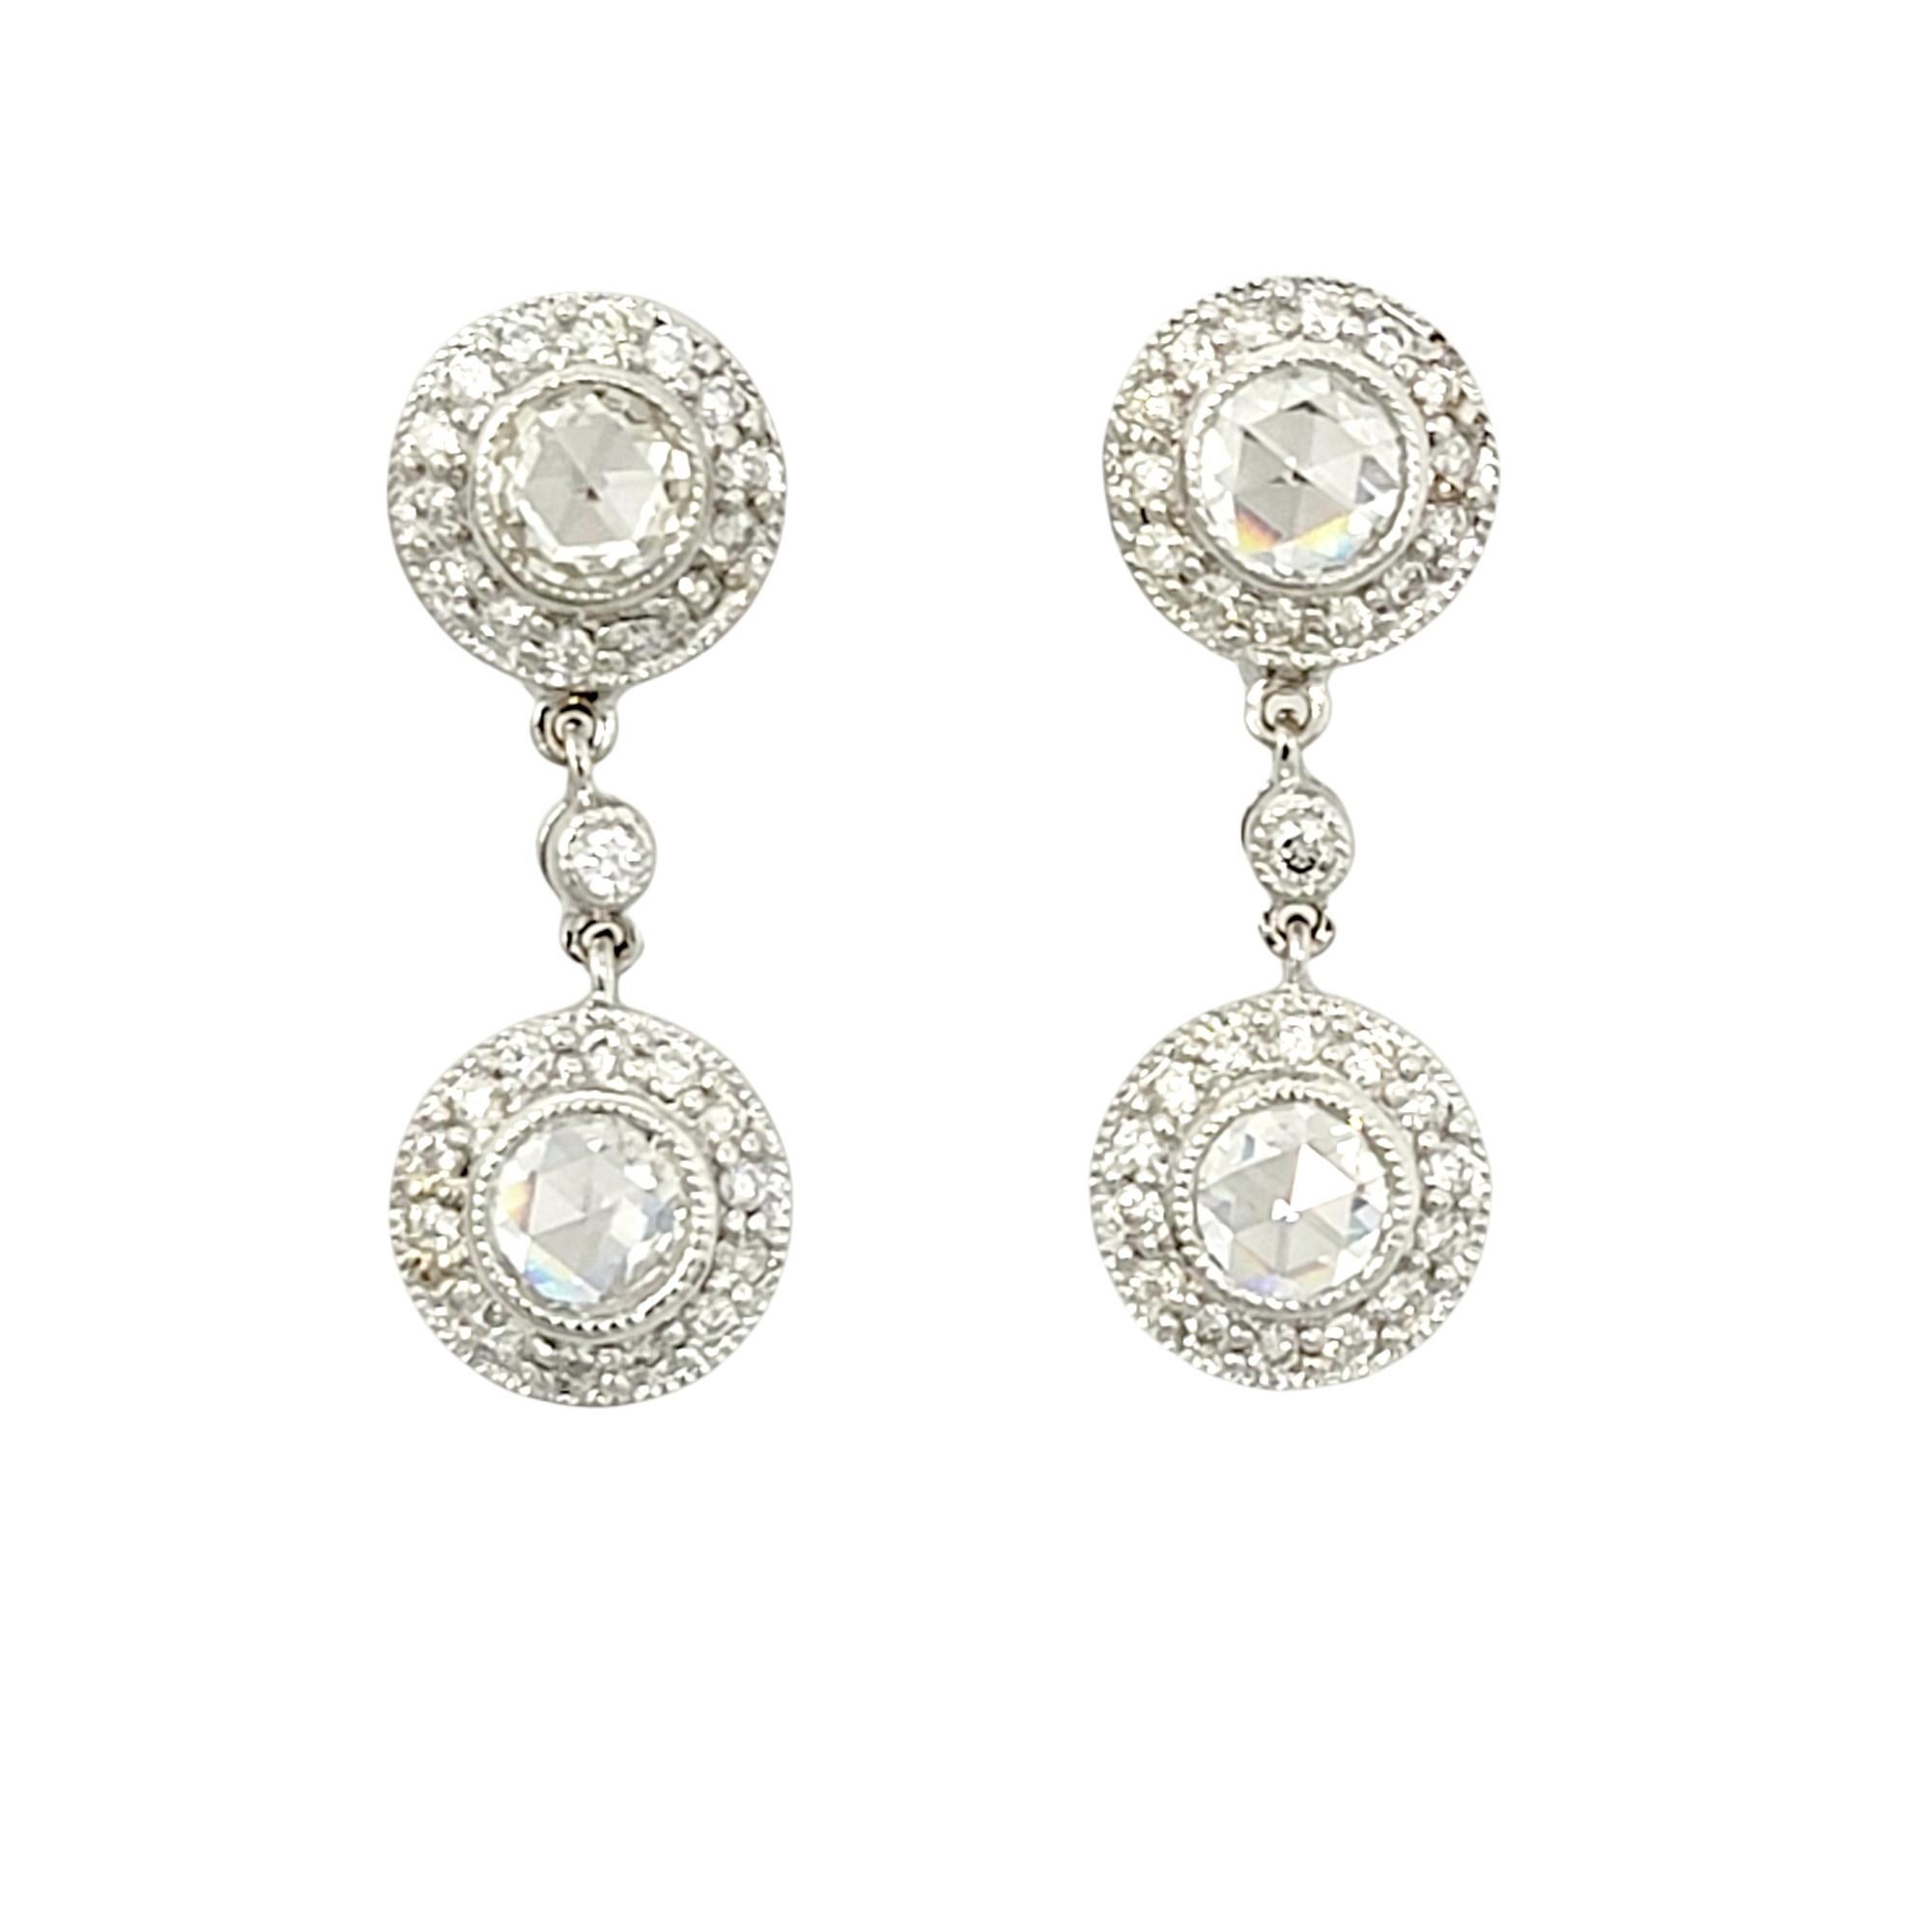 Gorgeous double diamond halo dangle earrings bursting with incredible sparkle.

Earring style: Dangle
Metal: 14 Karat White Gold 
Natural Diamonds: .96 ctw
Diamond color: G-H
Diamond clarity: VS2-SI1
Diamond cut: Rose and Round
Length: 1